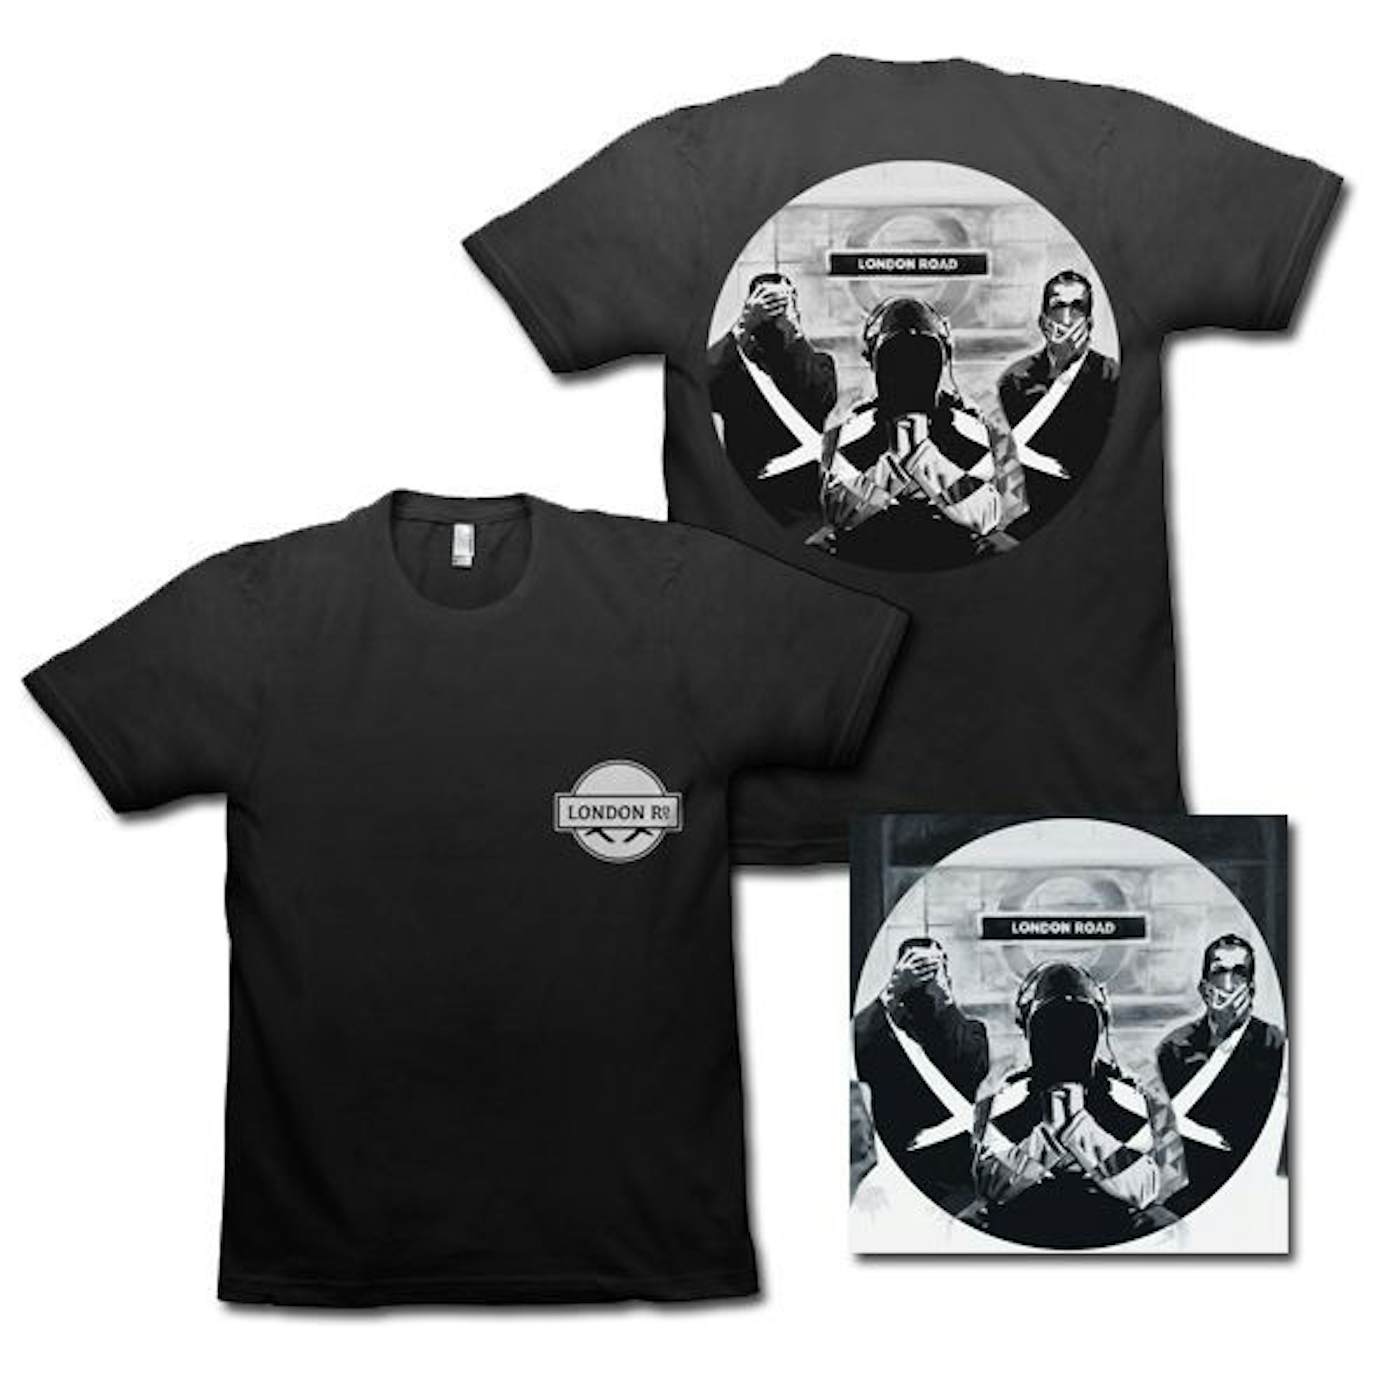 Modestep London Road CD + T-Shirt Bundle